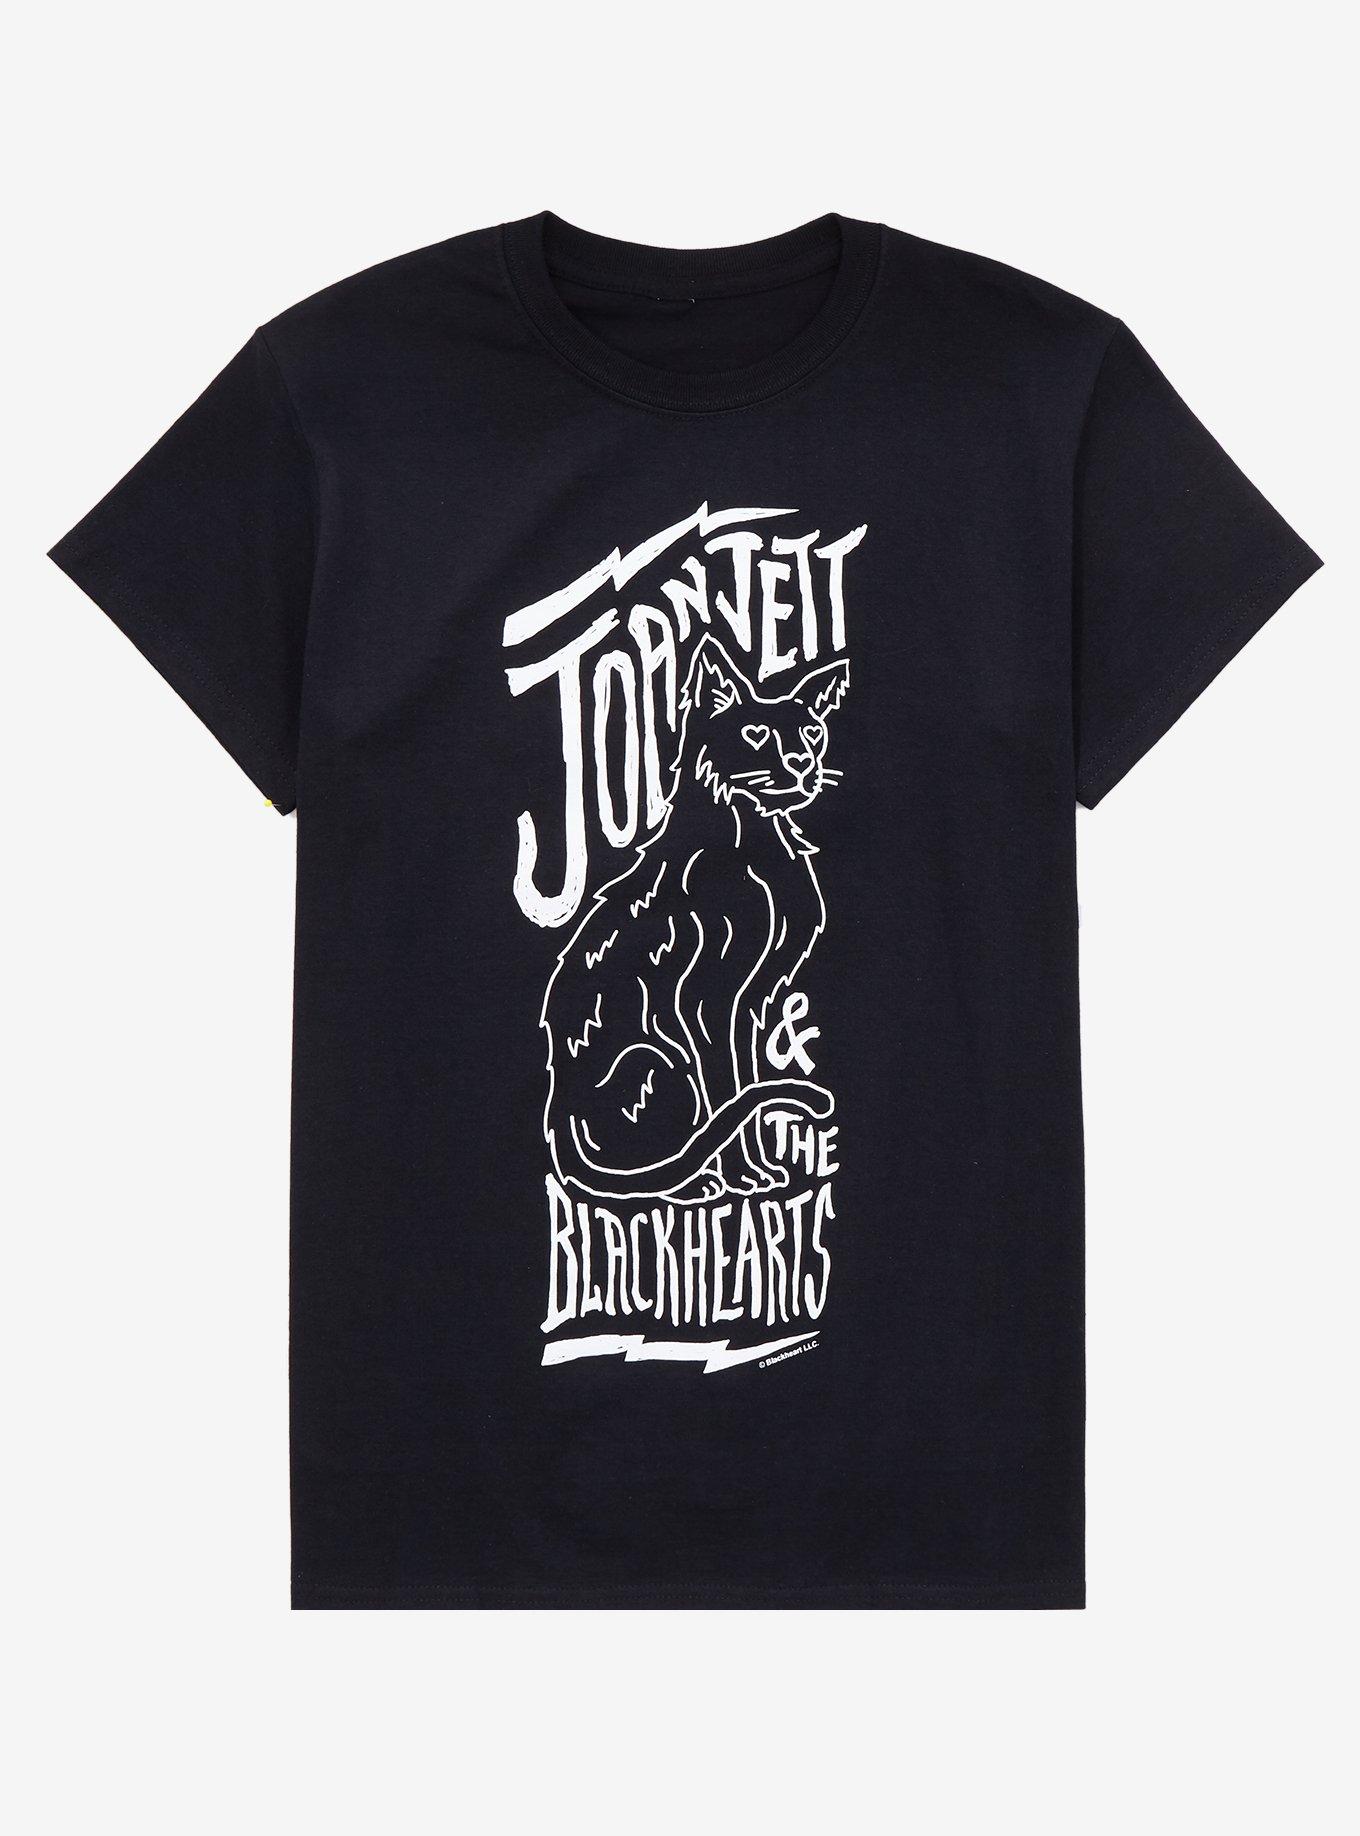 Joan Jett & The Blackhearts Black Cat Girls T-Shirt, BLACK, hi-res